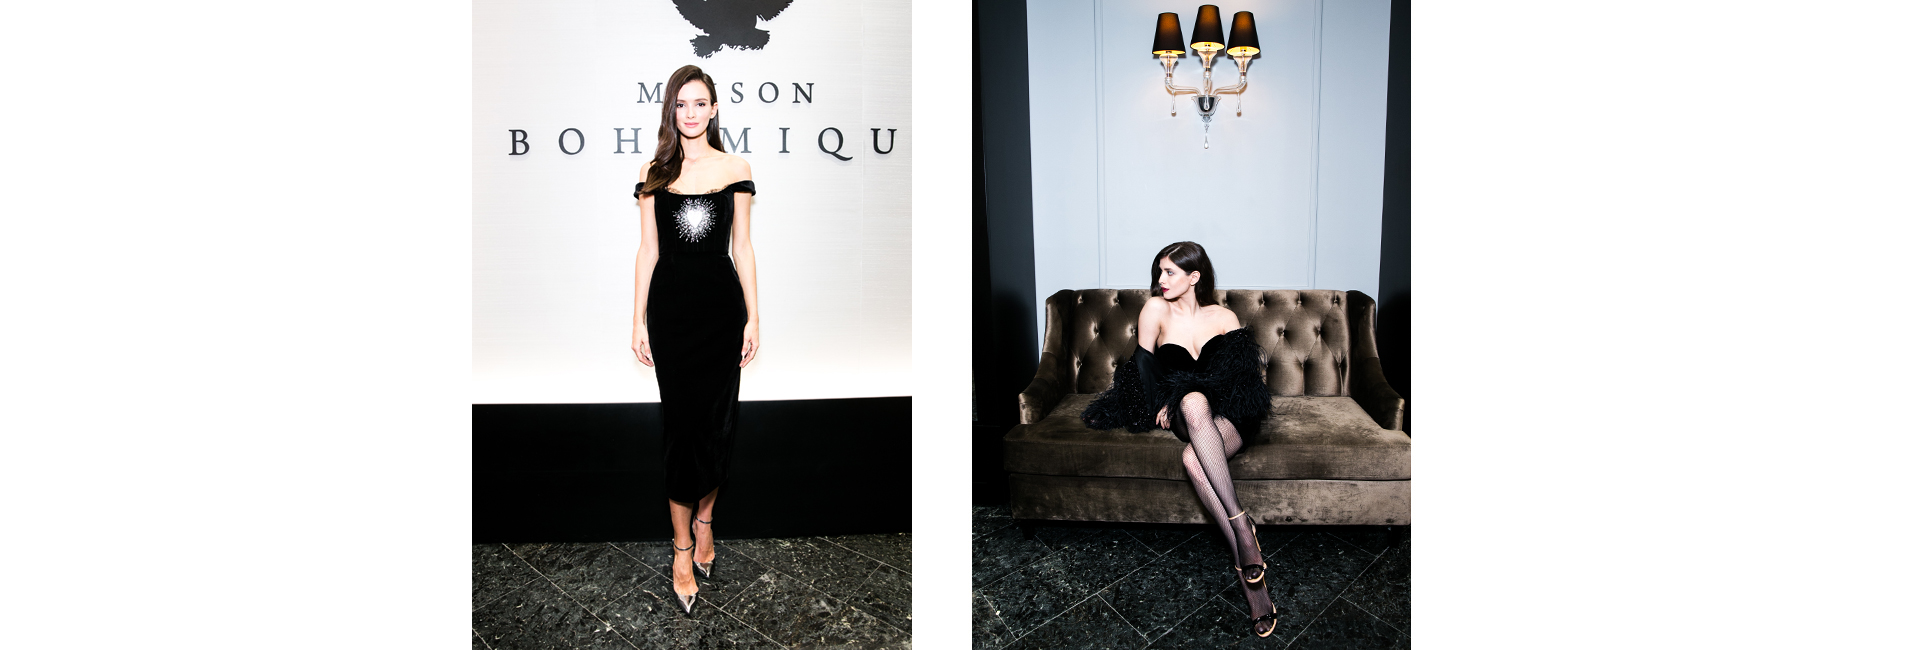 Maison Bohemique представил новую коллекцию Demi Couture (фото 2)